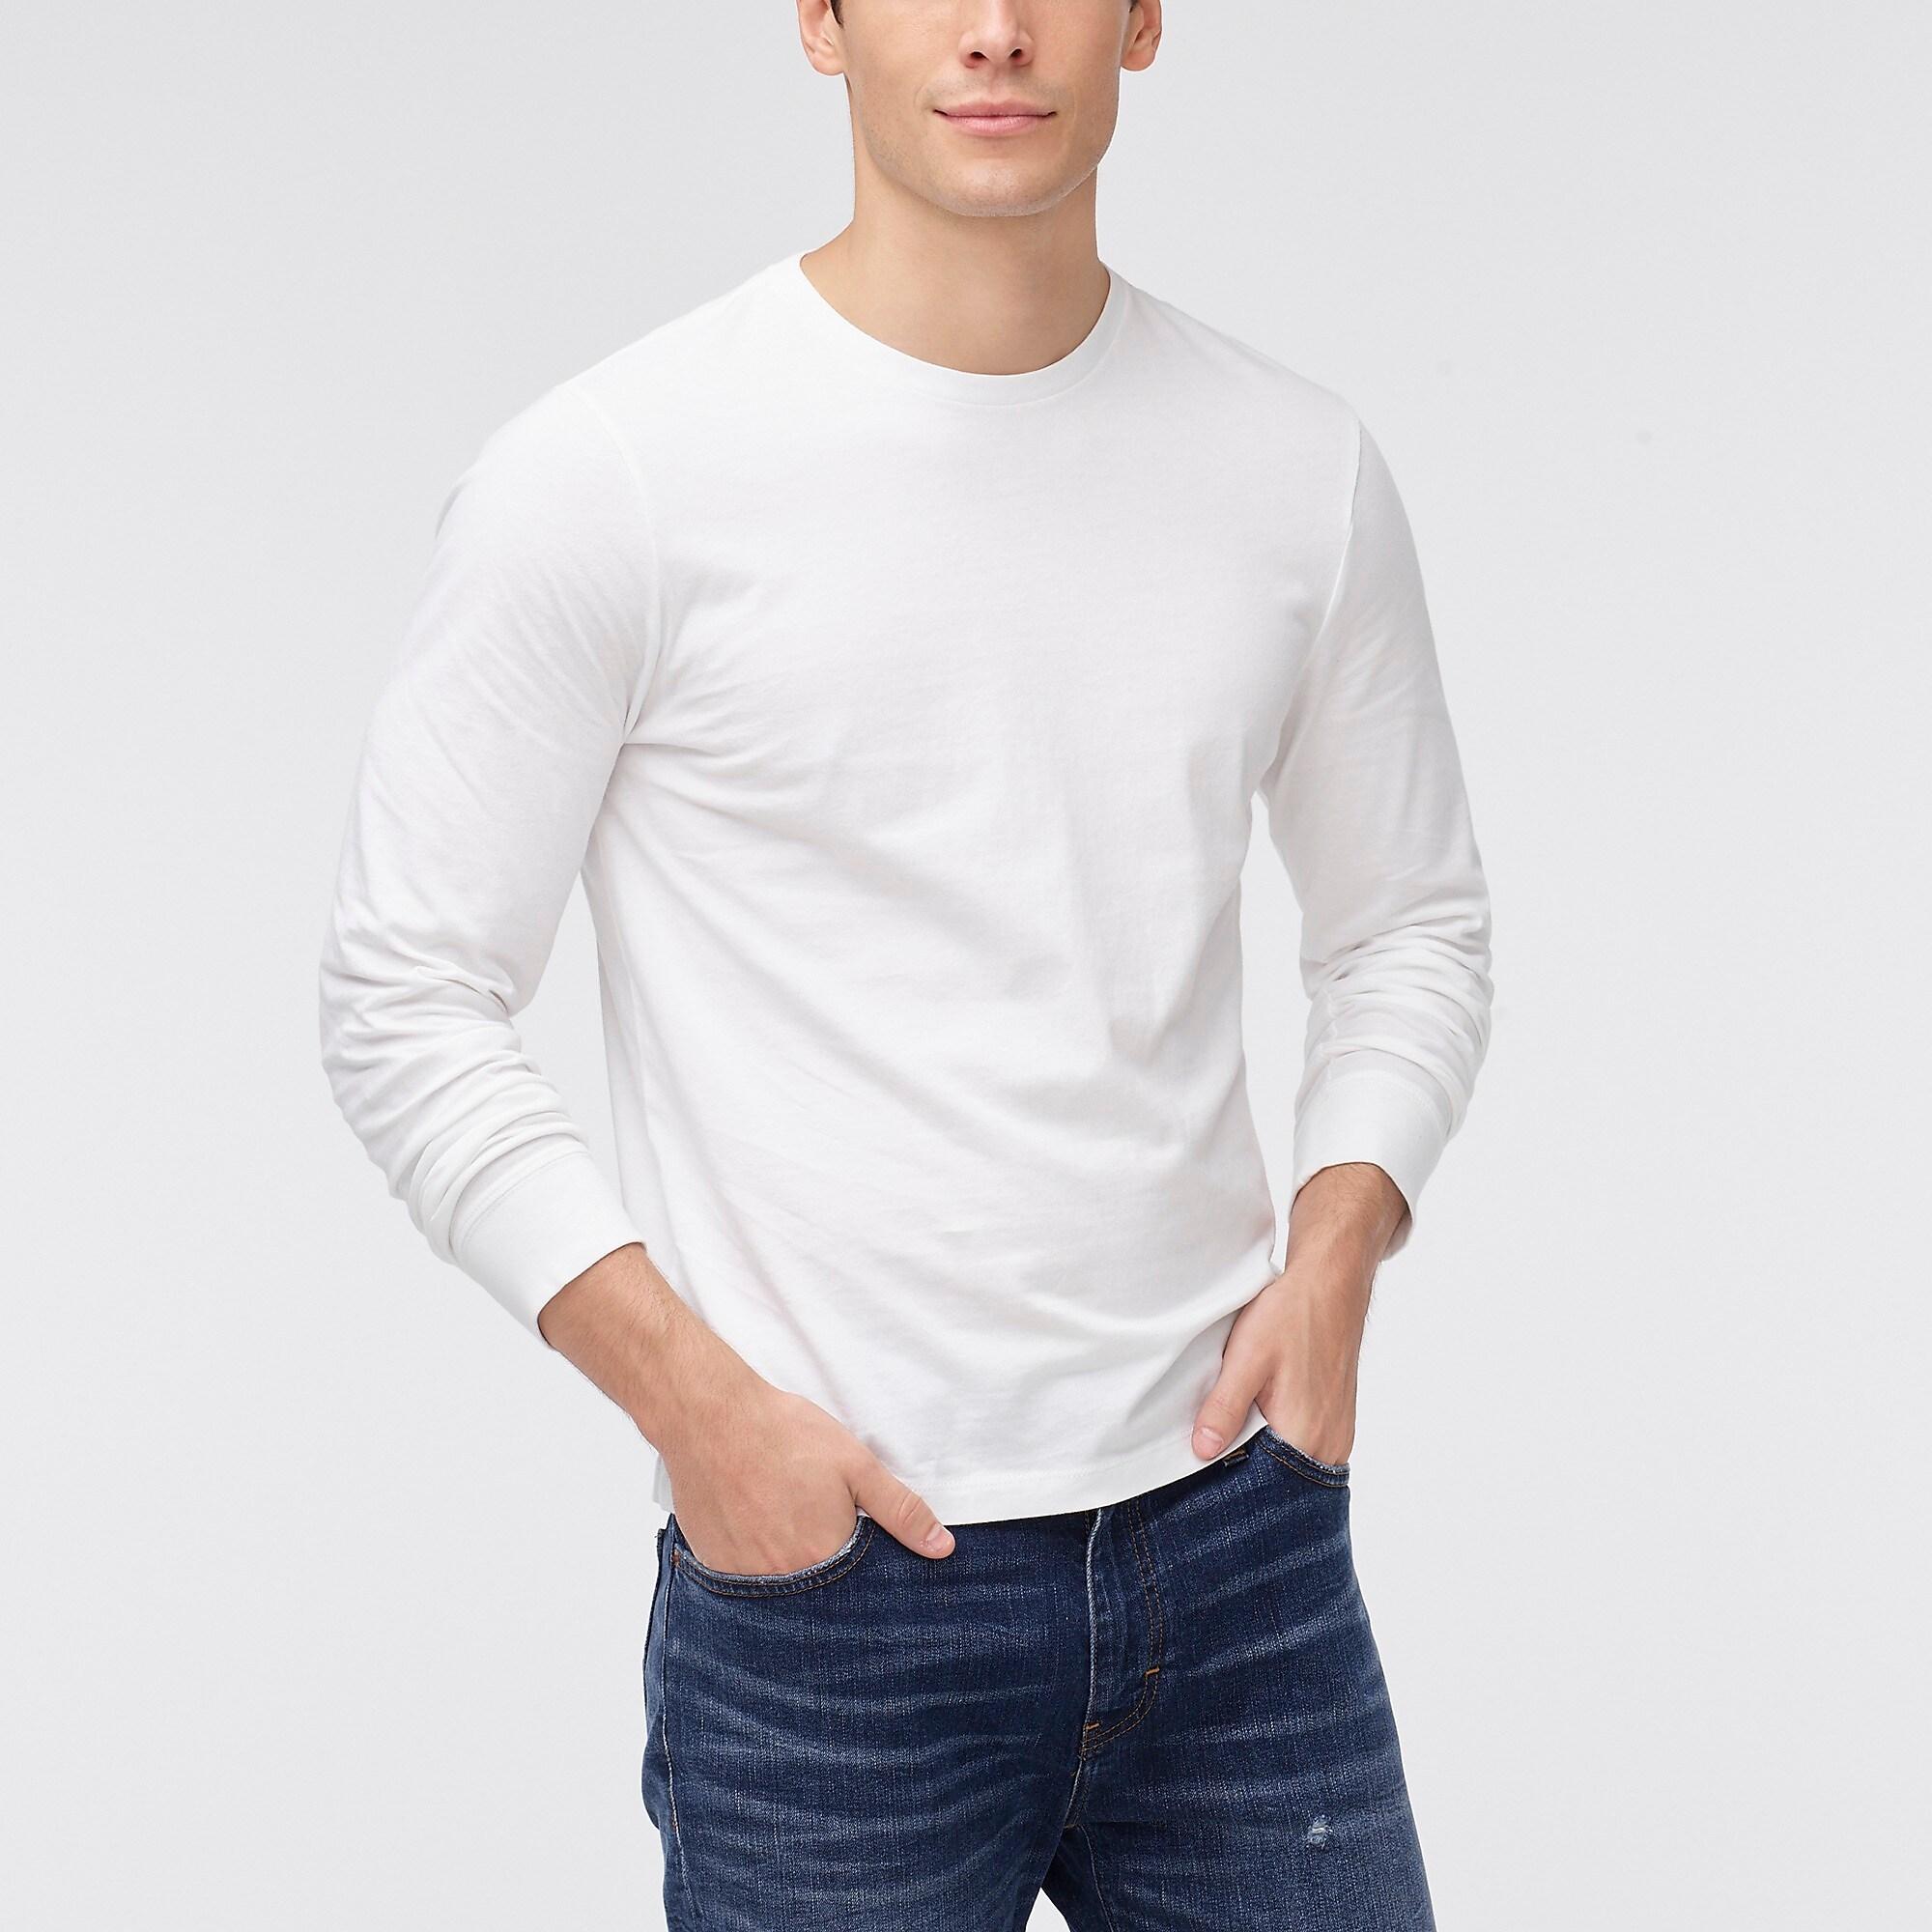 J.Crew Cotton Long-sleeve T-shirt in White for Men - Lyst